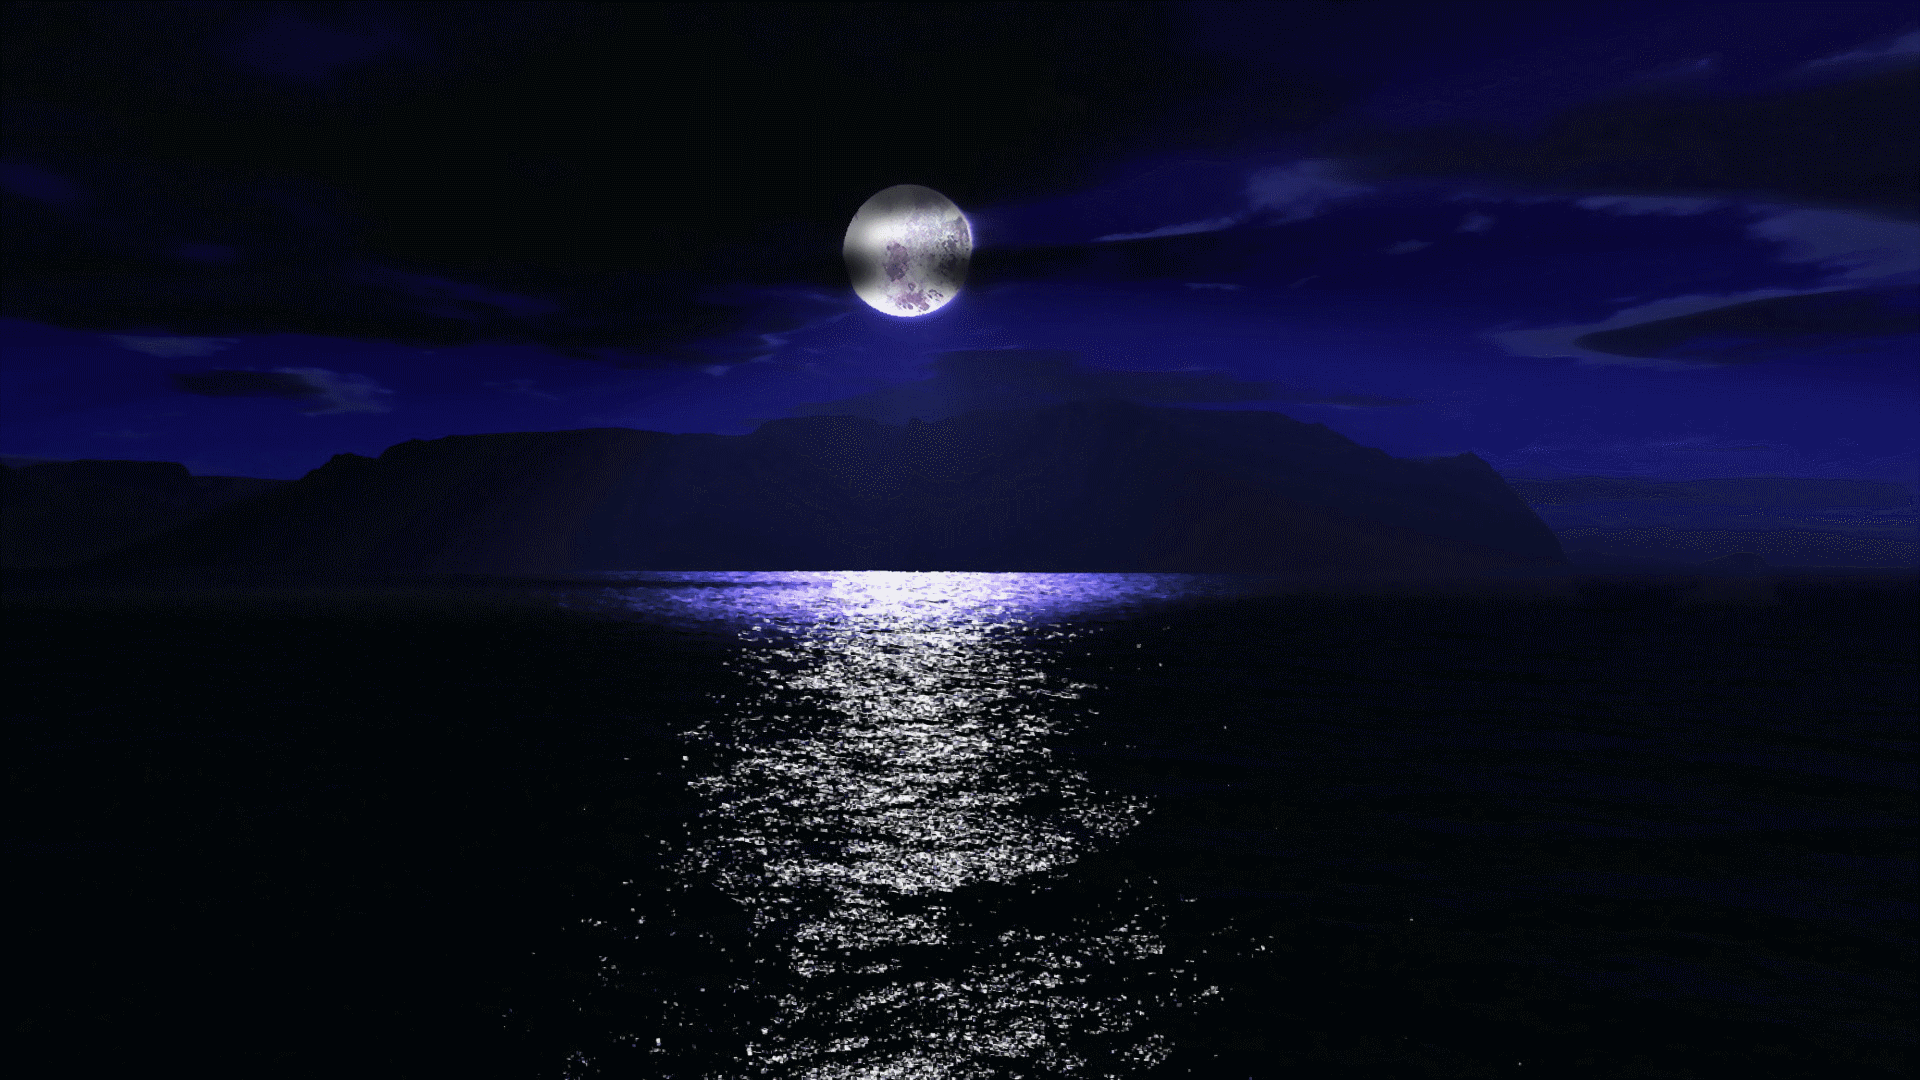 sea gif background, sea , sky , night , background , gif , boat